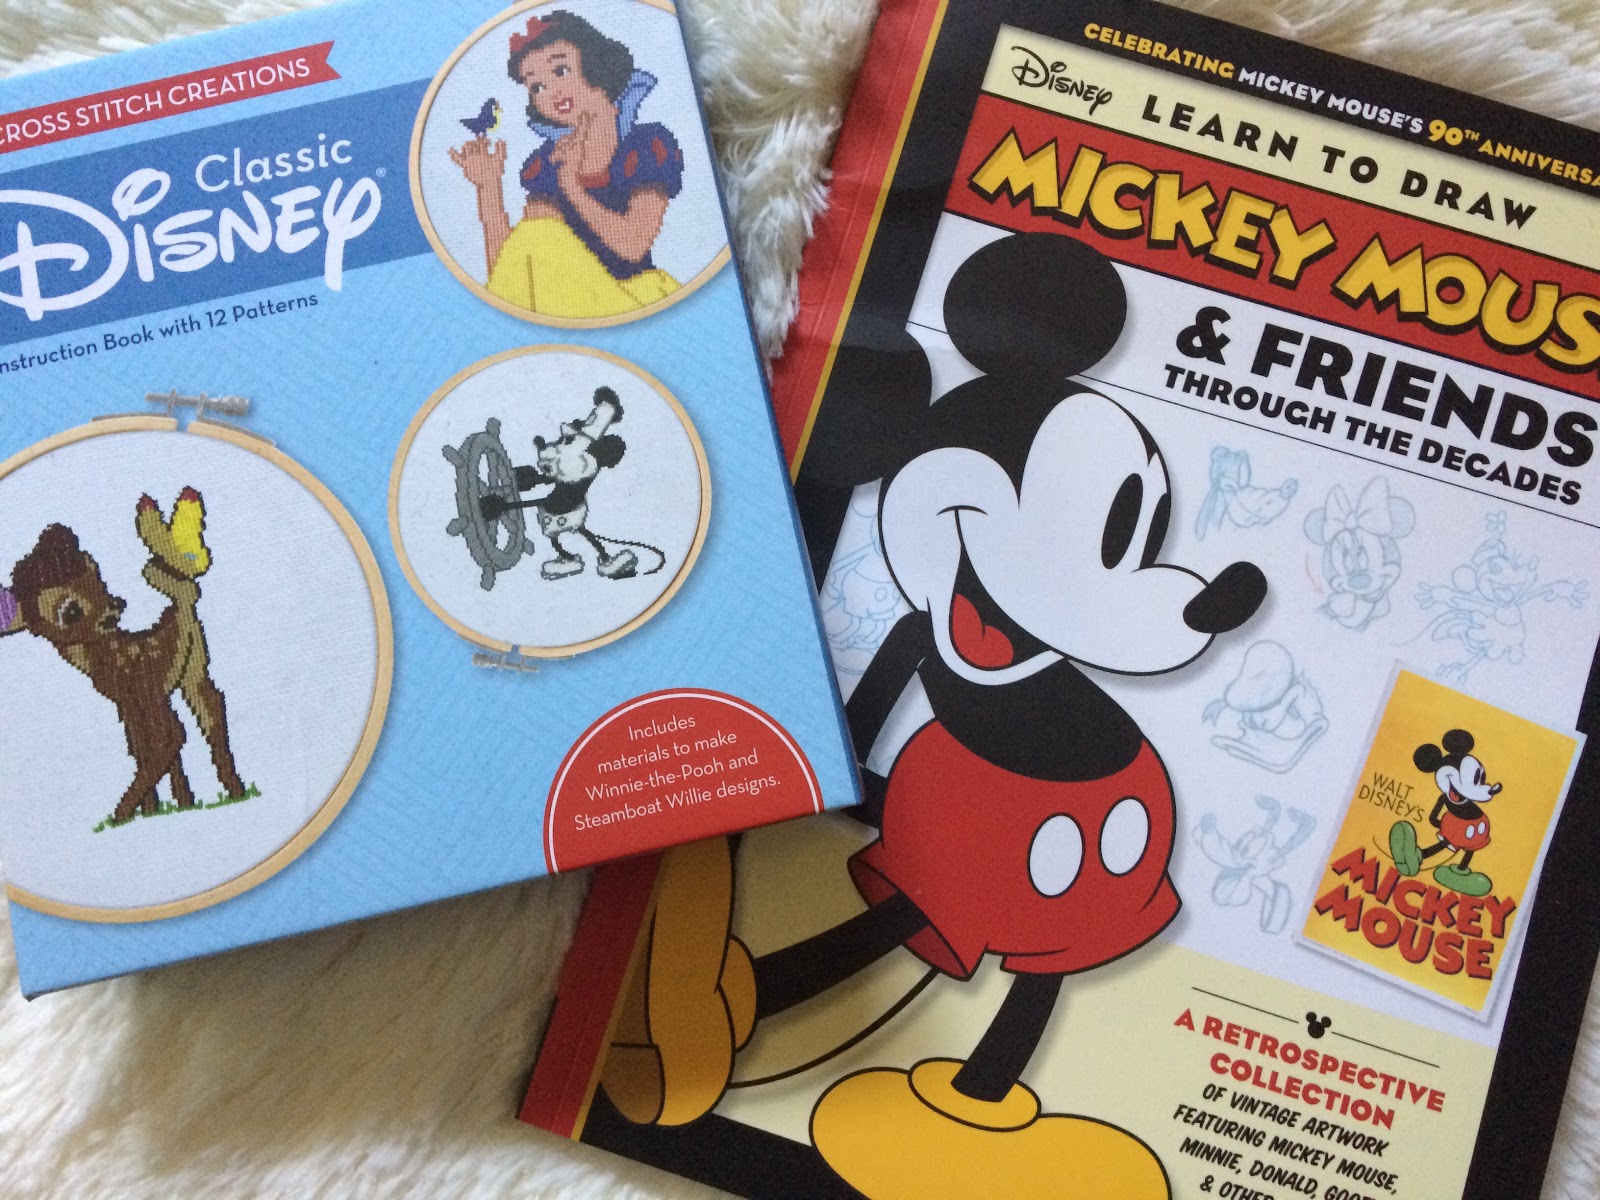 Disney Classic Cross Stitch Kit - 12 Patterns Featuring Classic Disney Characters